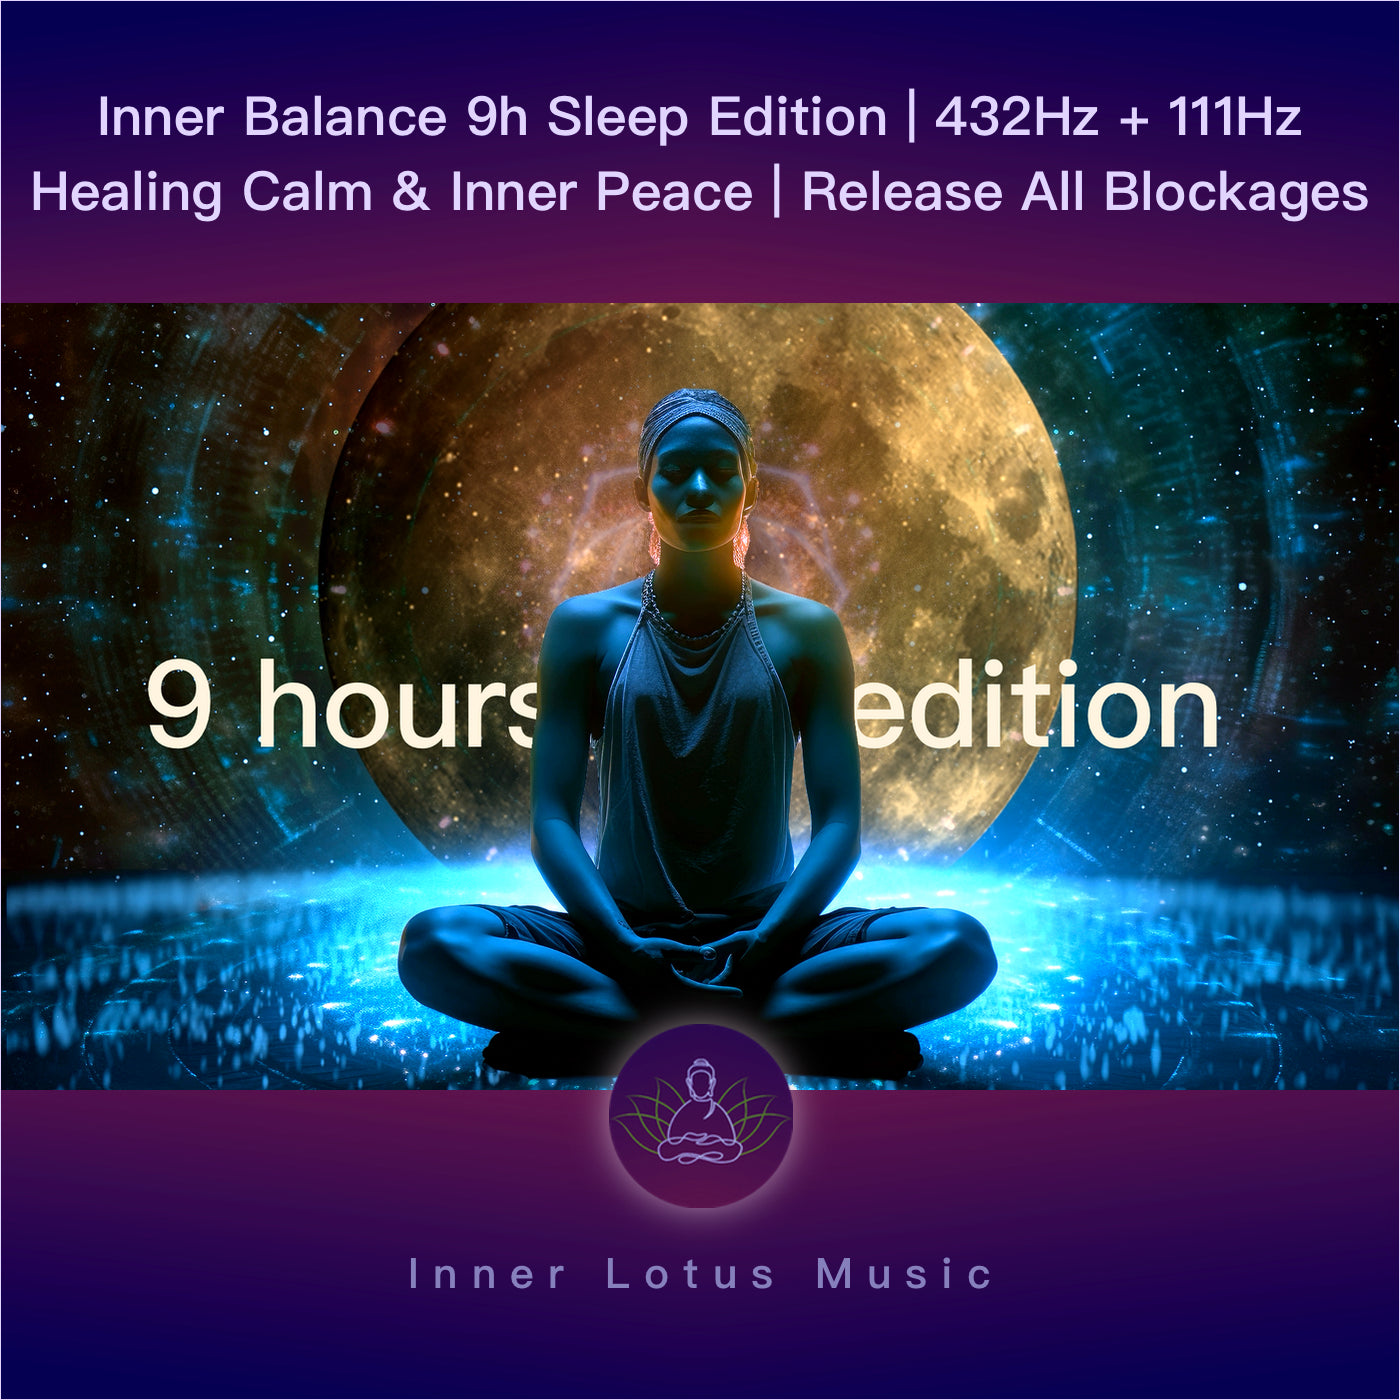 Inner Balance 9h Sleep Edition | 432Hz + 111Hz Healing Calm & Inner Peace | Release All Blockages